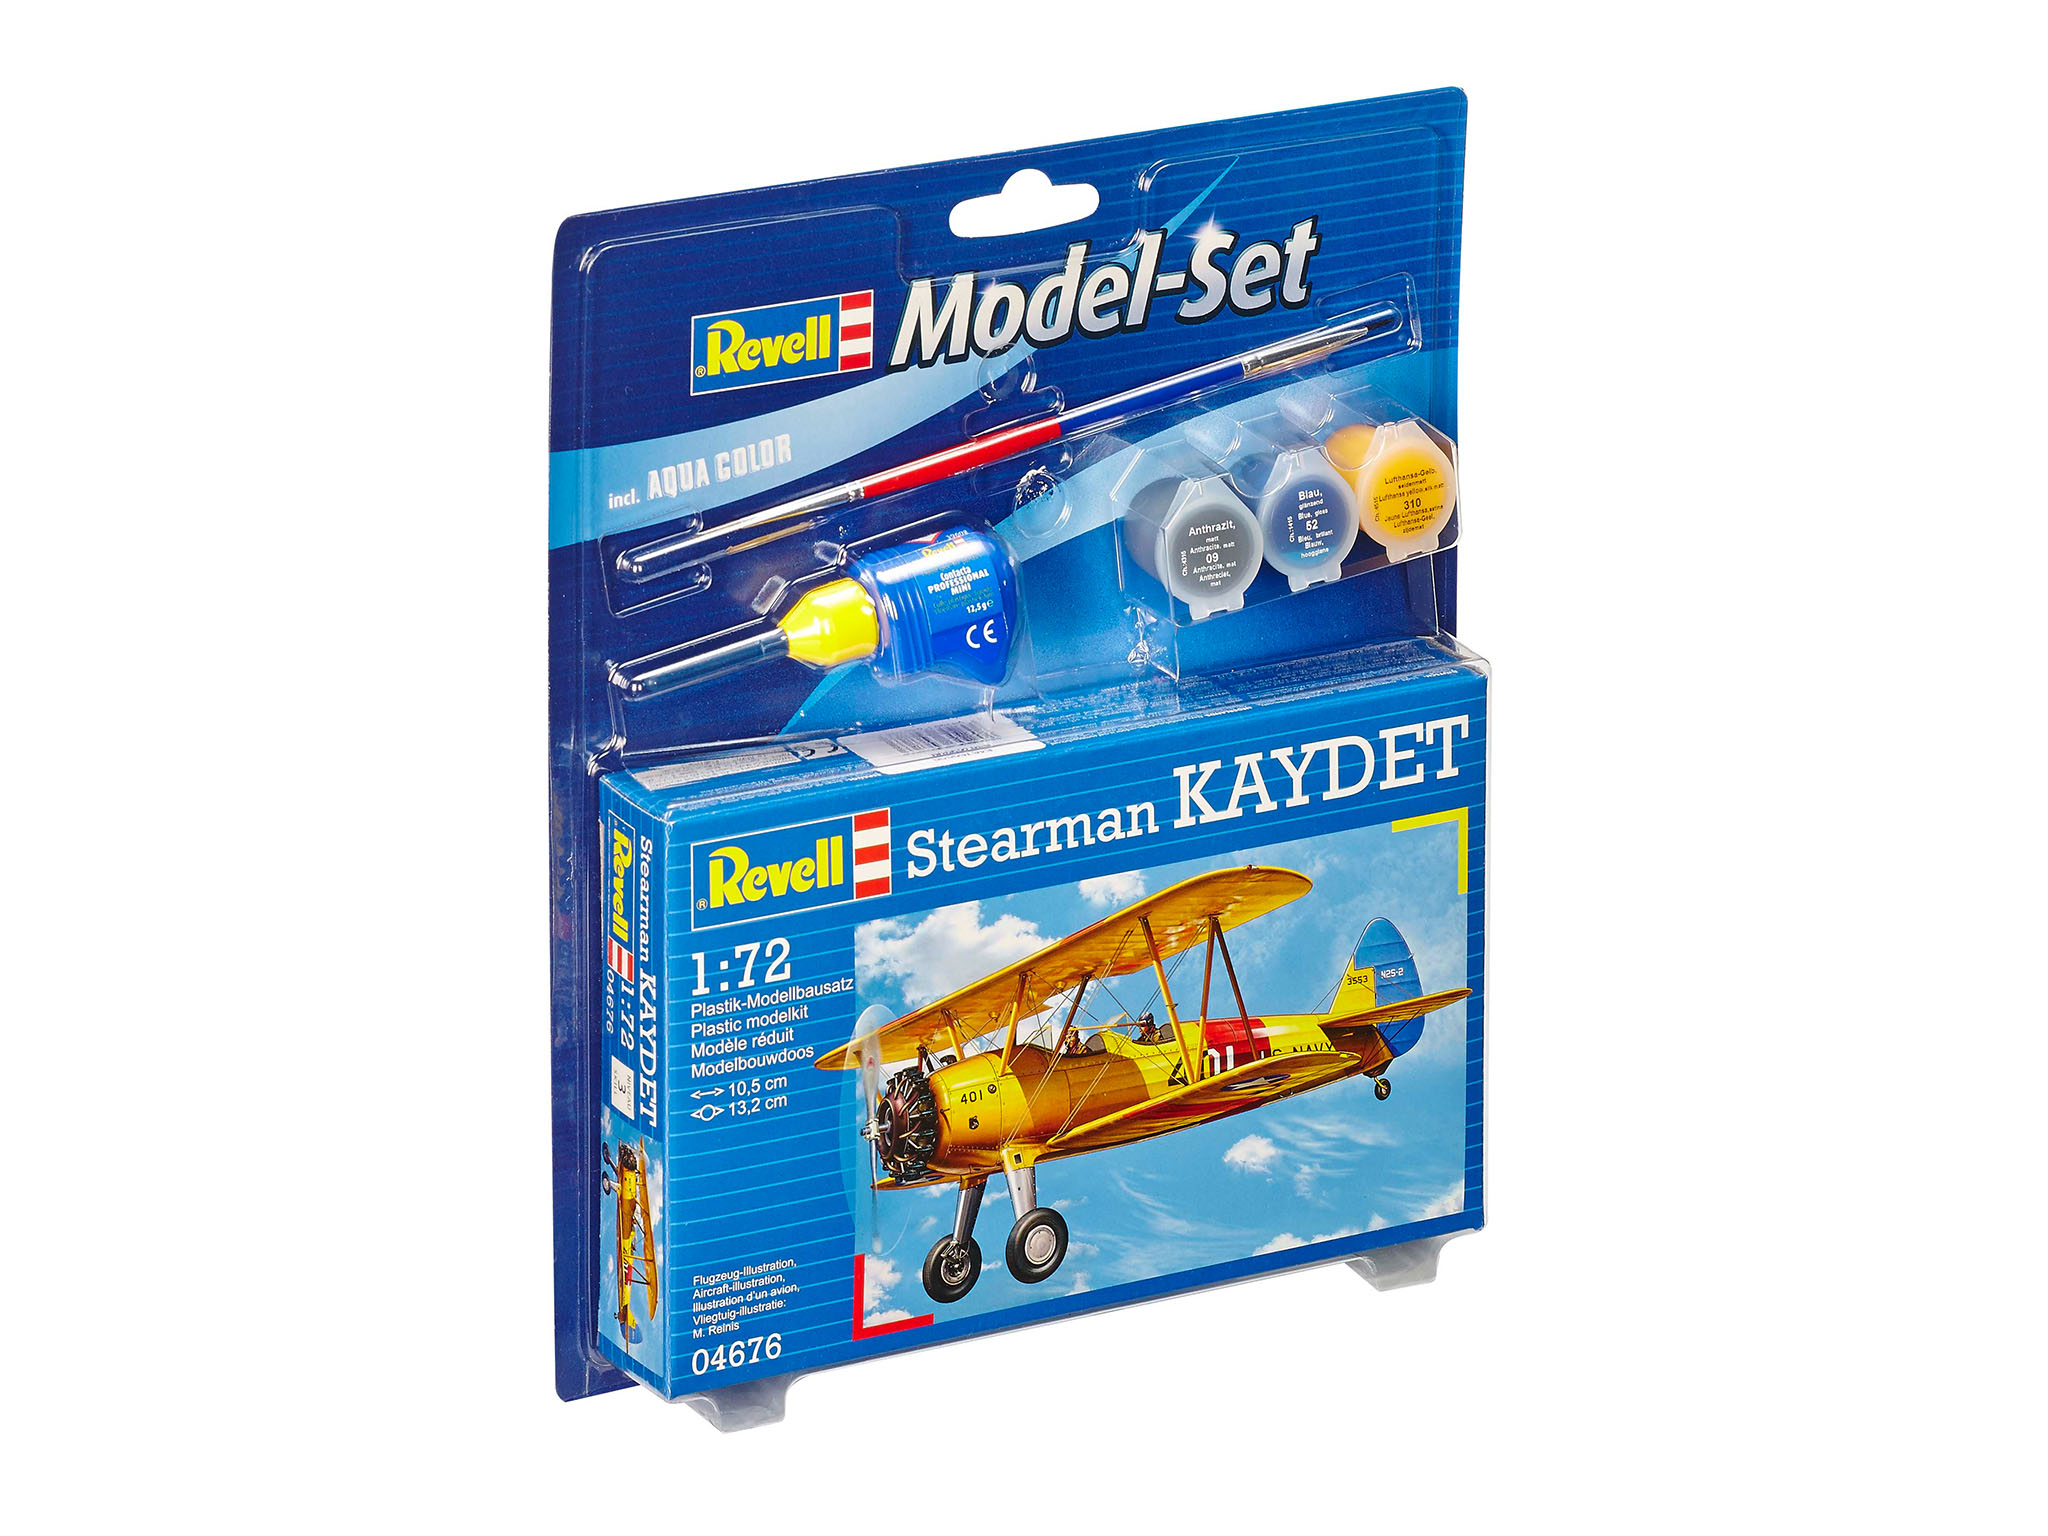 Modellbausatz, REVELL Mehrfarbig STEARMAN MODEL KAYDET SET 64676